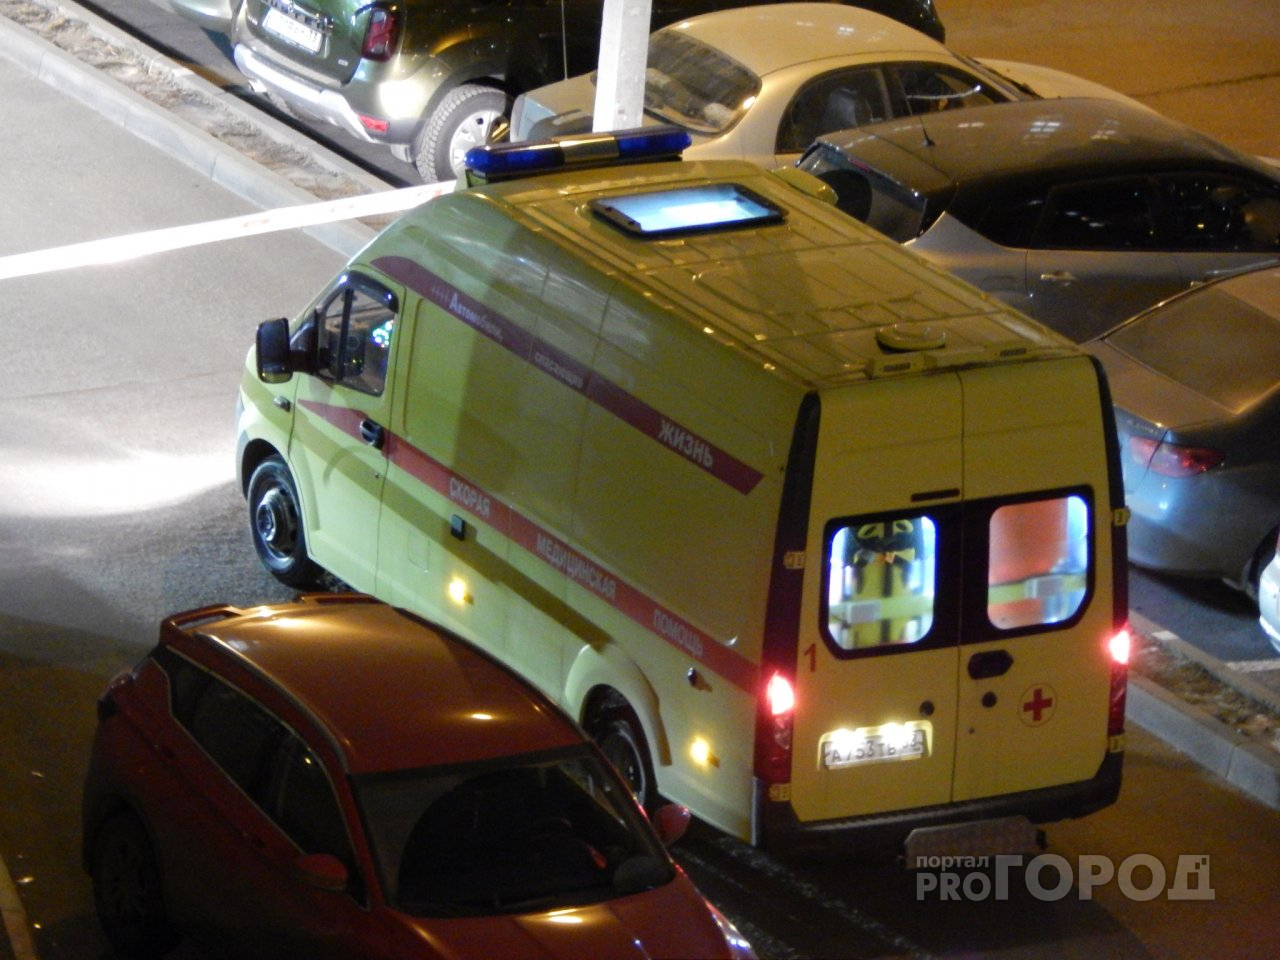 Врачам скорой помощи при трудоустройстве хотят платить 2 миллиона рублей